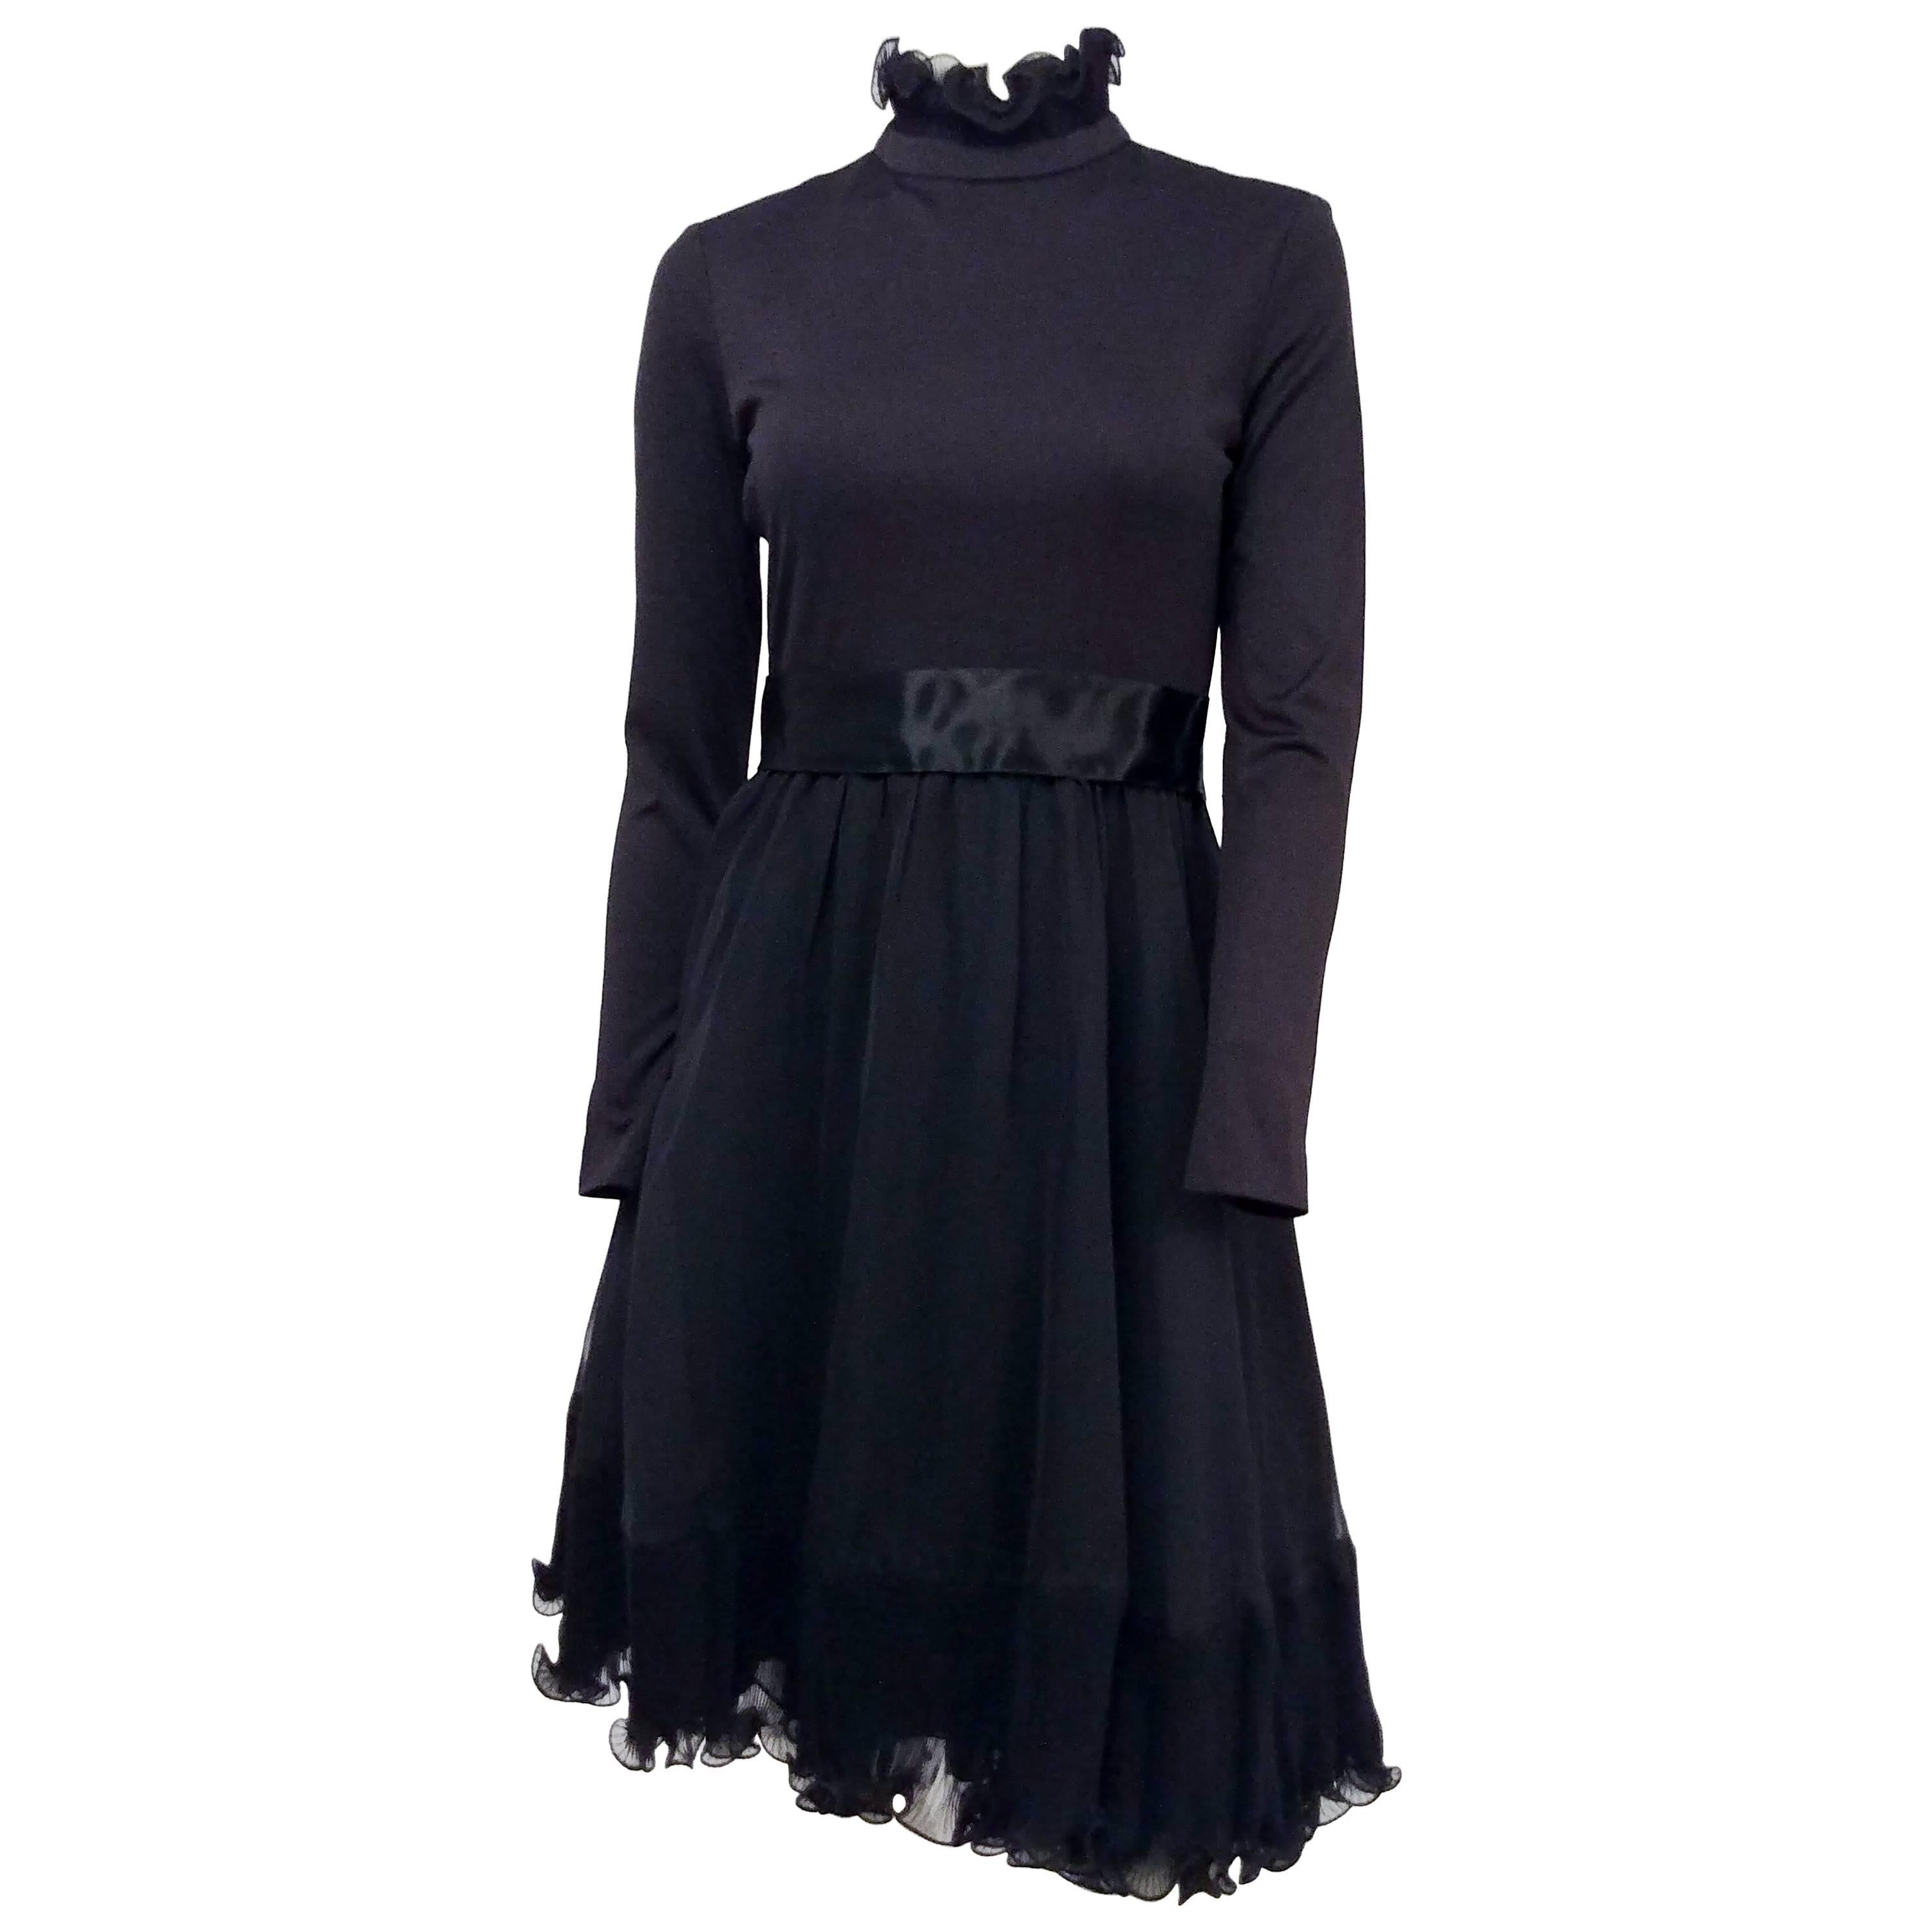 Miss. Magnin Black Cocktail Dress w/ Ruffled Skirt, 1960s For Sale